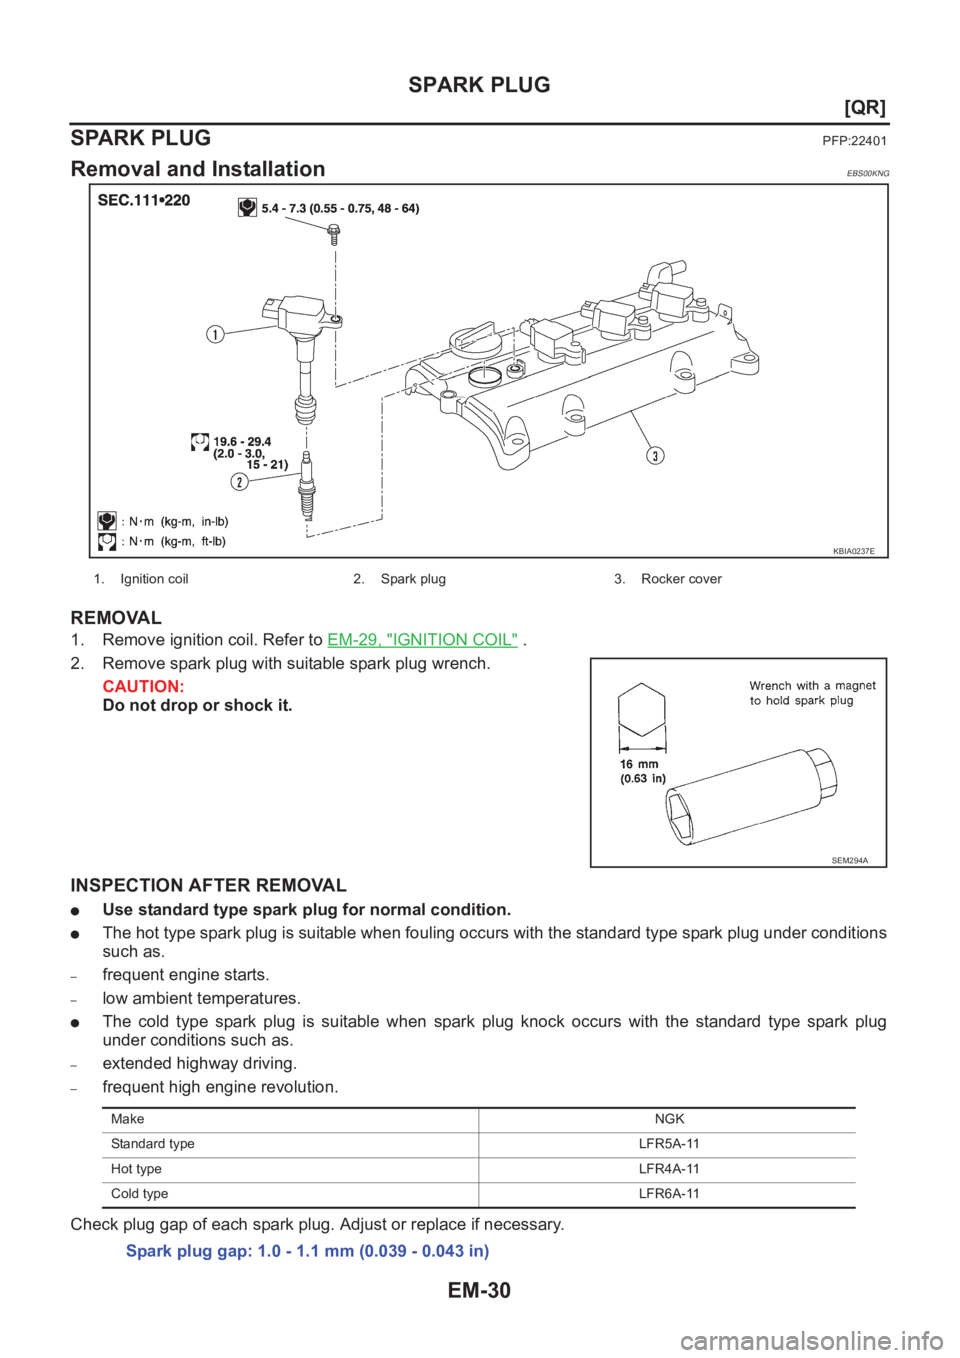 NISSAN X-TRAIL 2001  Service Repair Manual EM-30
[QR]
SPARK PLUG
SPARK PLUG 
PFP:22401
Removal and InstallationEBS00KNG
REMOVAL
1. Remove ignition coil. Refer to EM-29, "IGNITION COIL" .
2. Remove spark plug with suitable spark plug wr